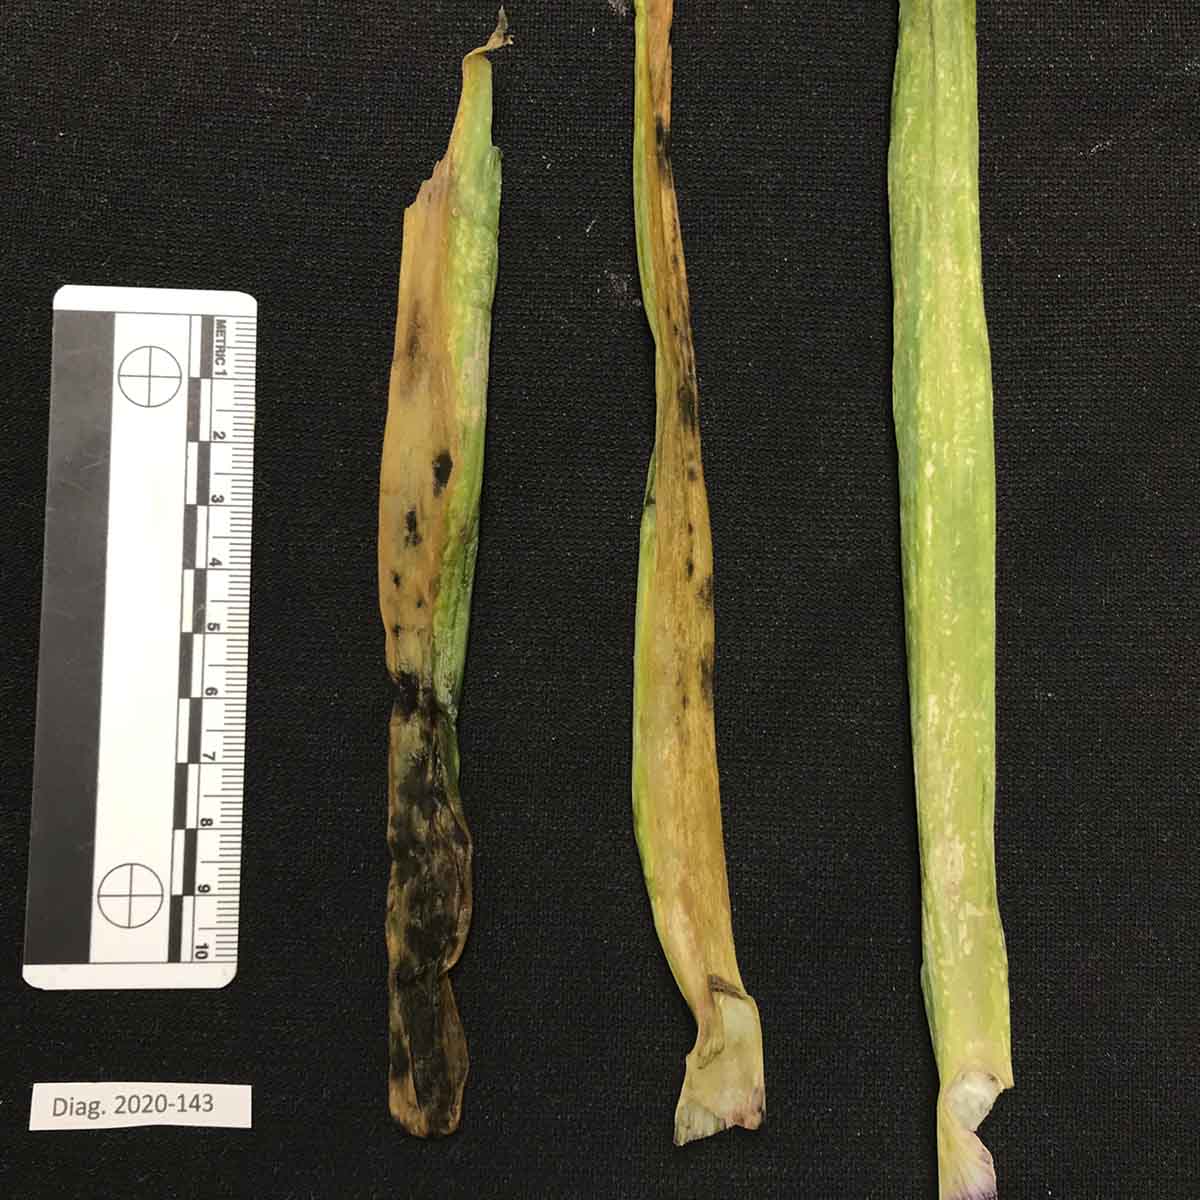 Stemphylium vesicarium - Leaf symptoms (naturally infected)